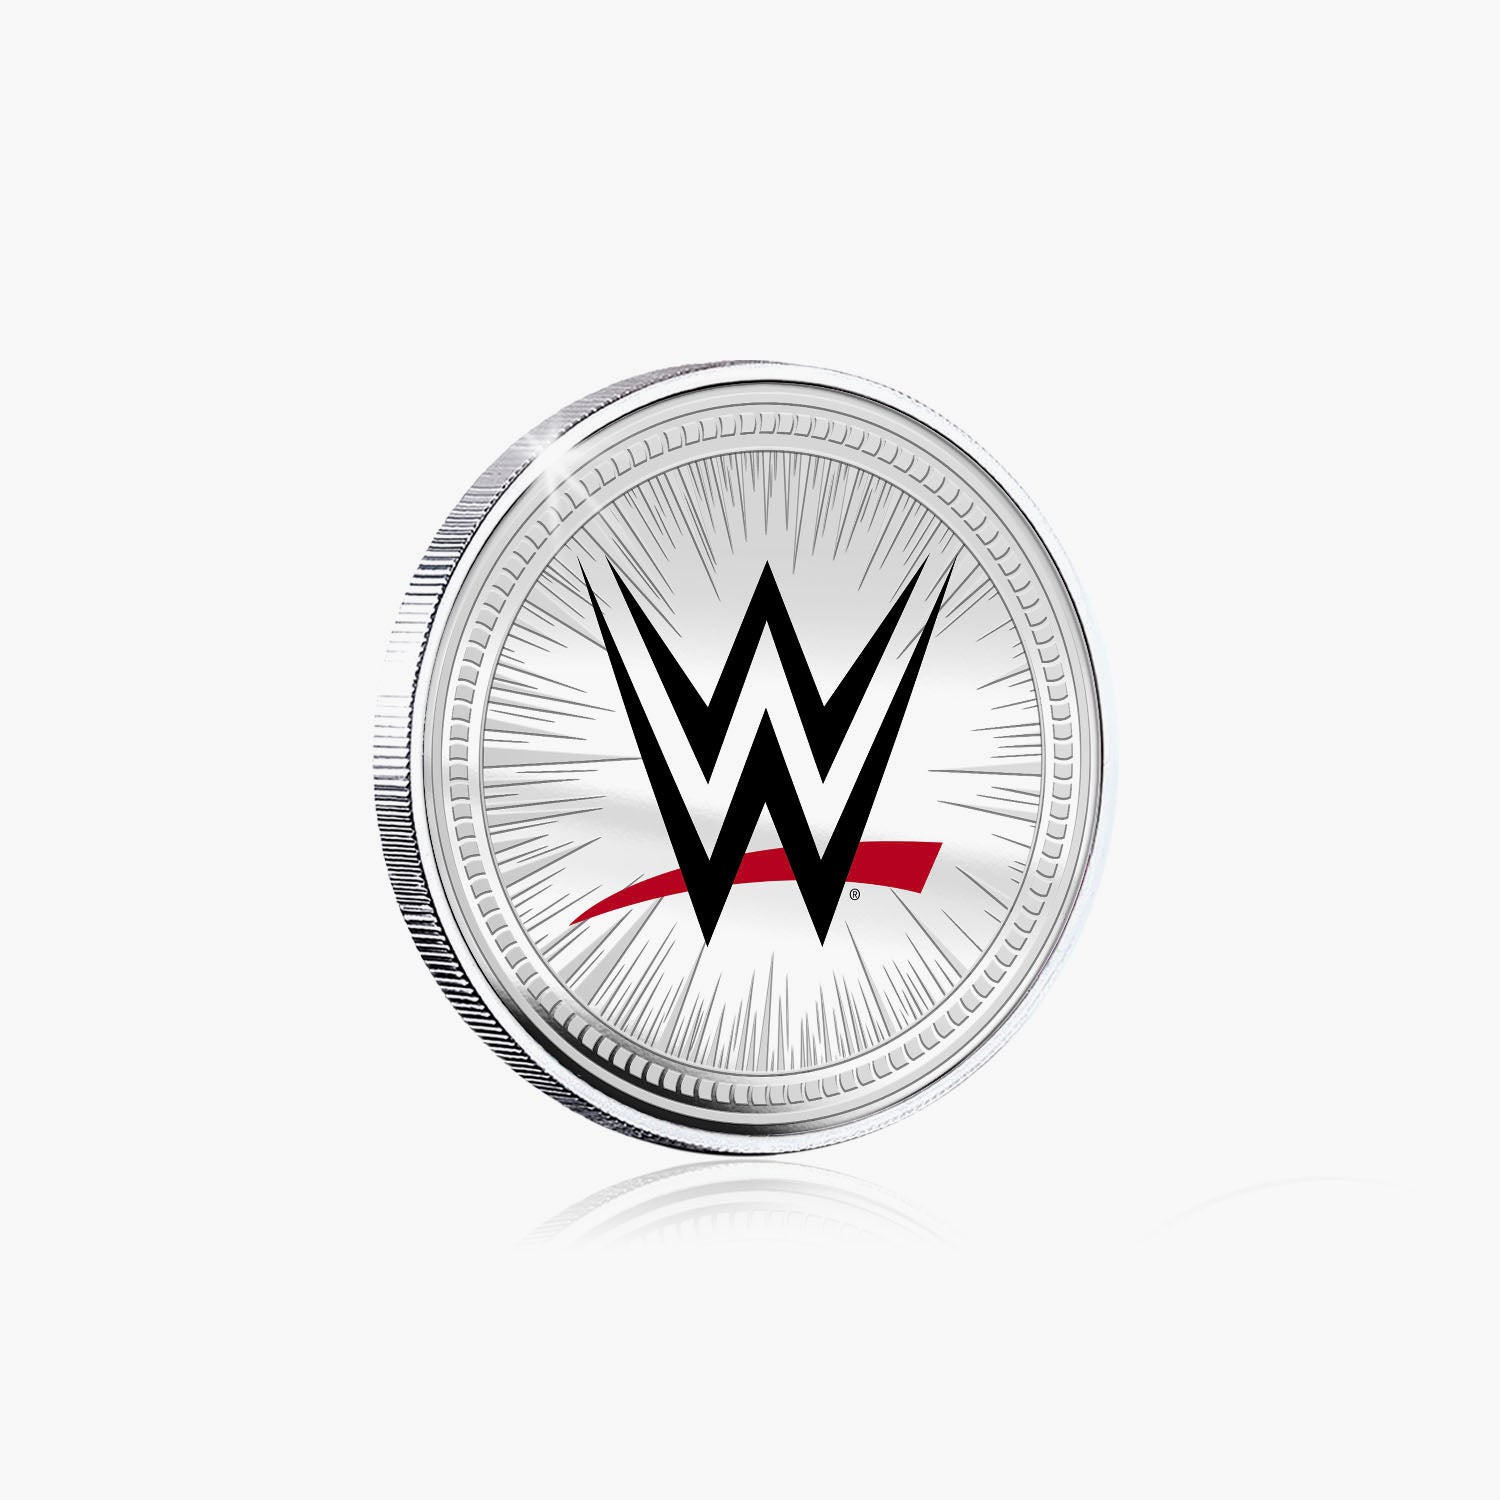 WWE Commemorative Collection - John Cena - 32mm Silver Plated Commemorative